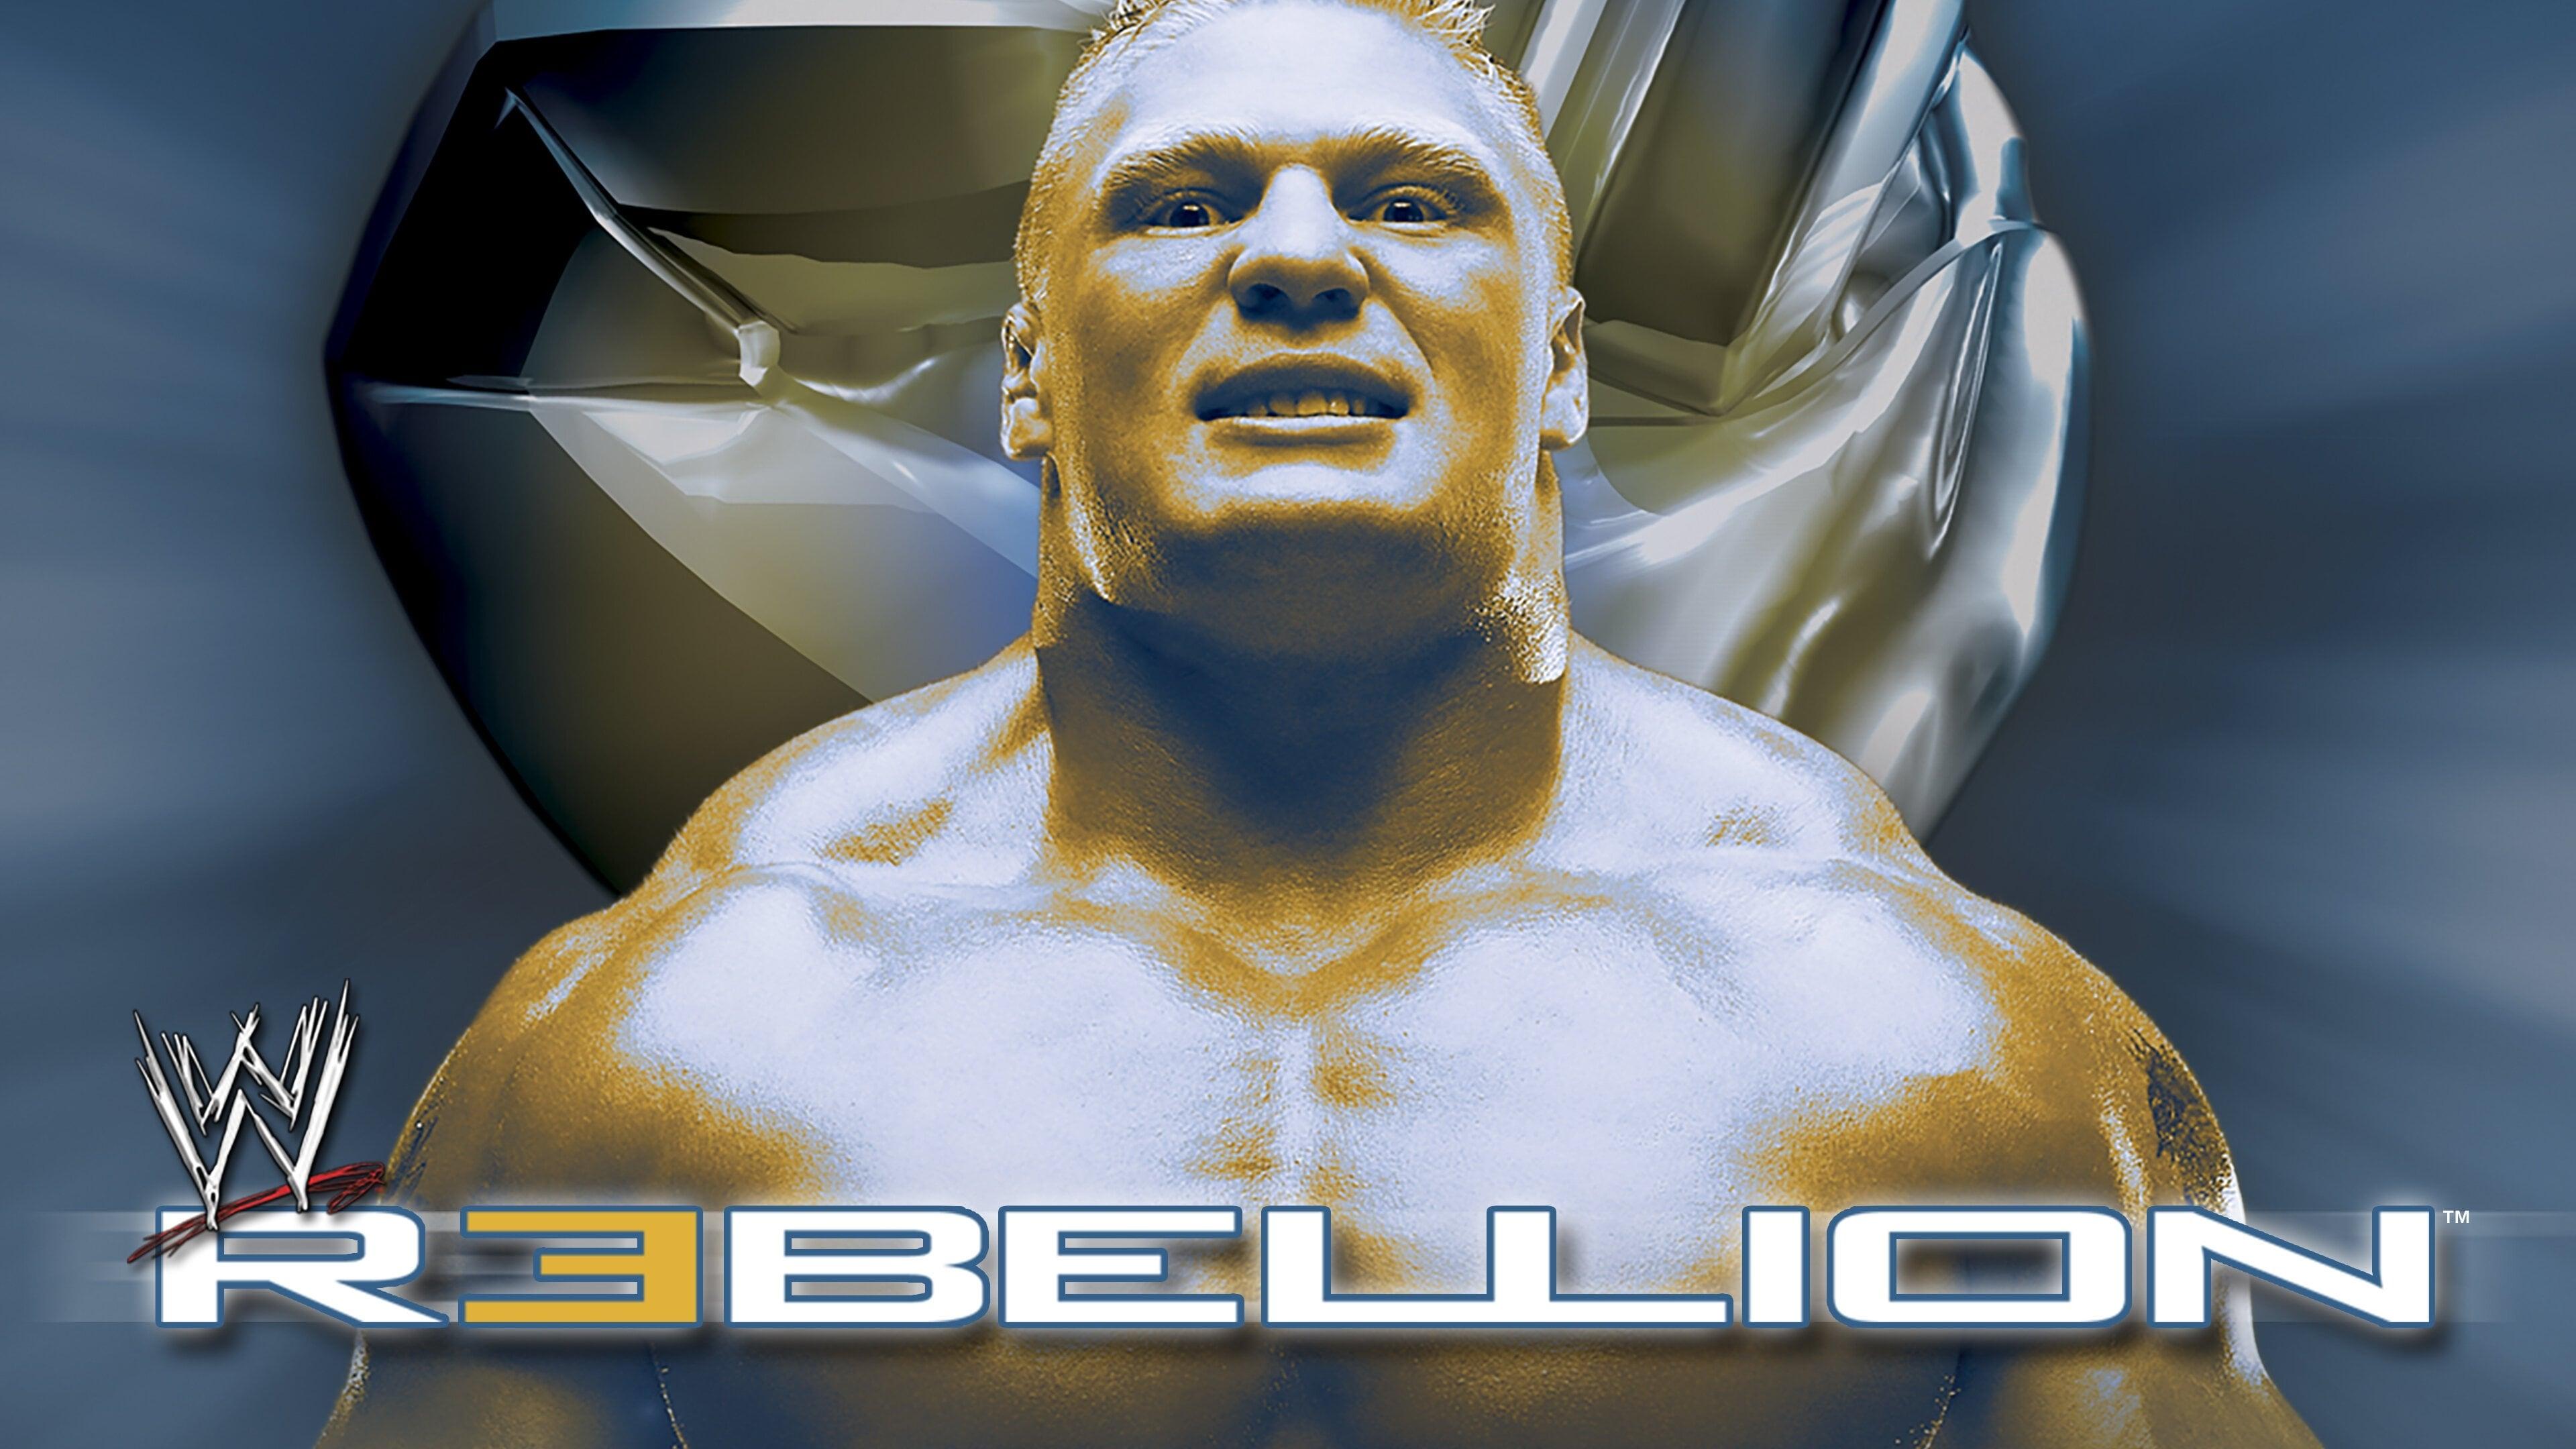 WWE Rebellion 2002 backdrop